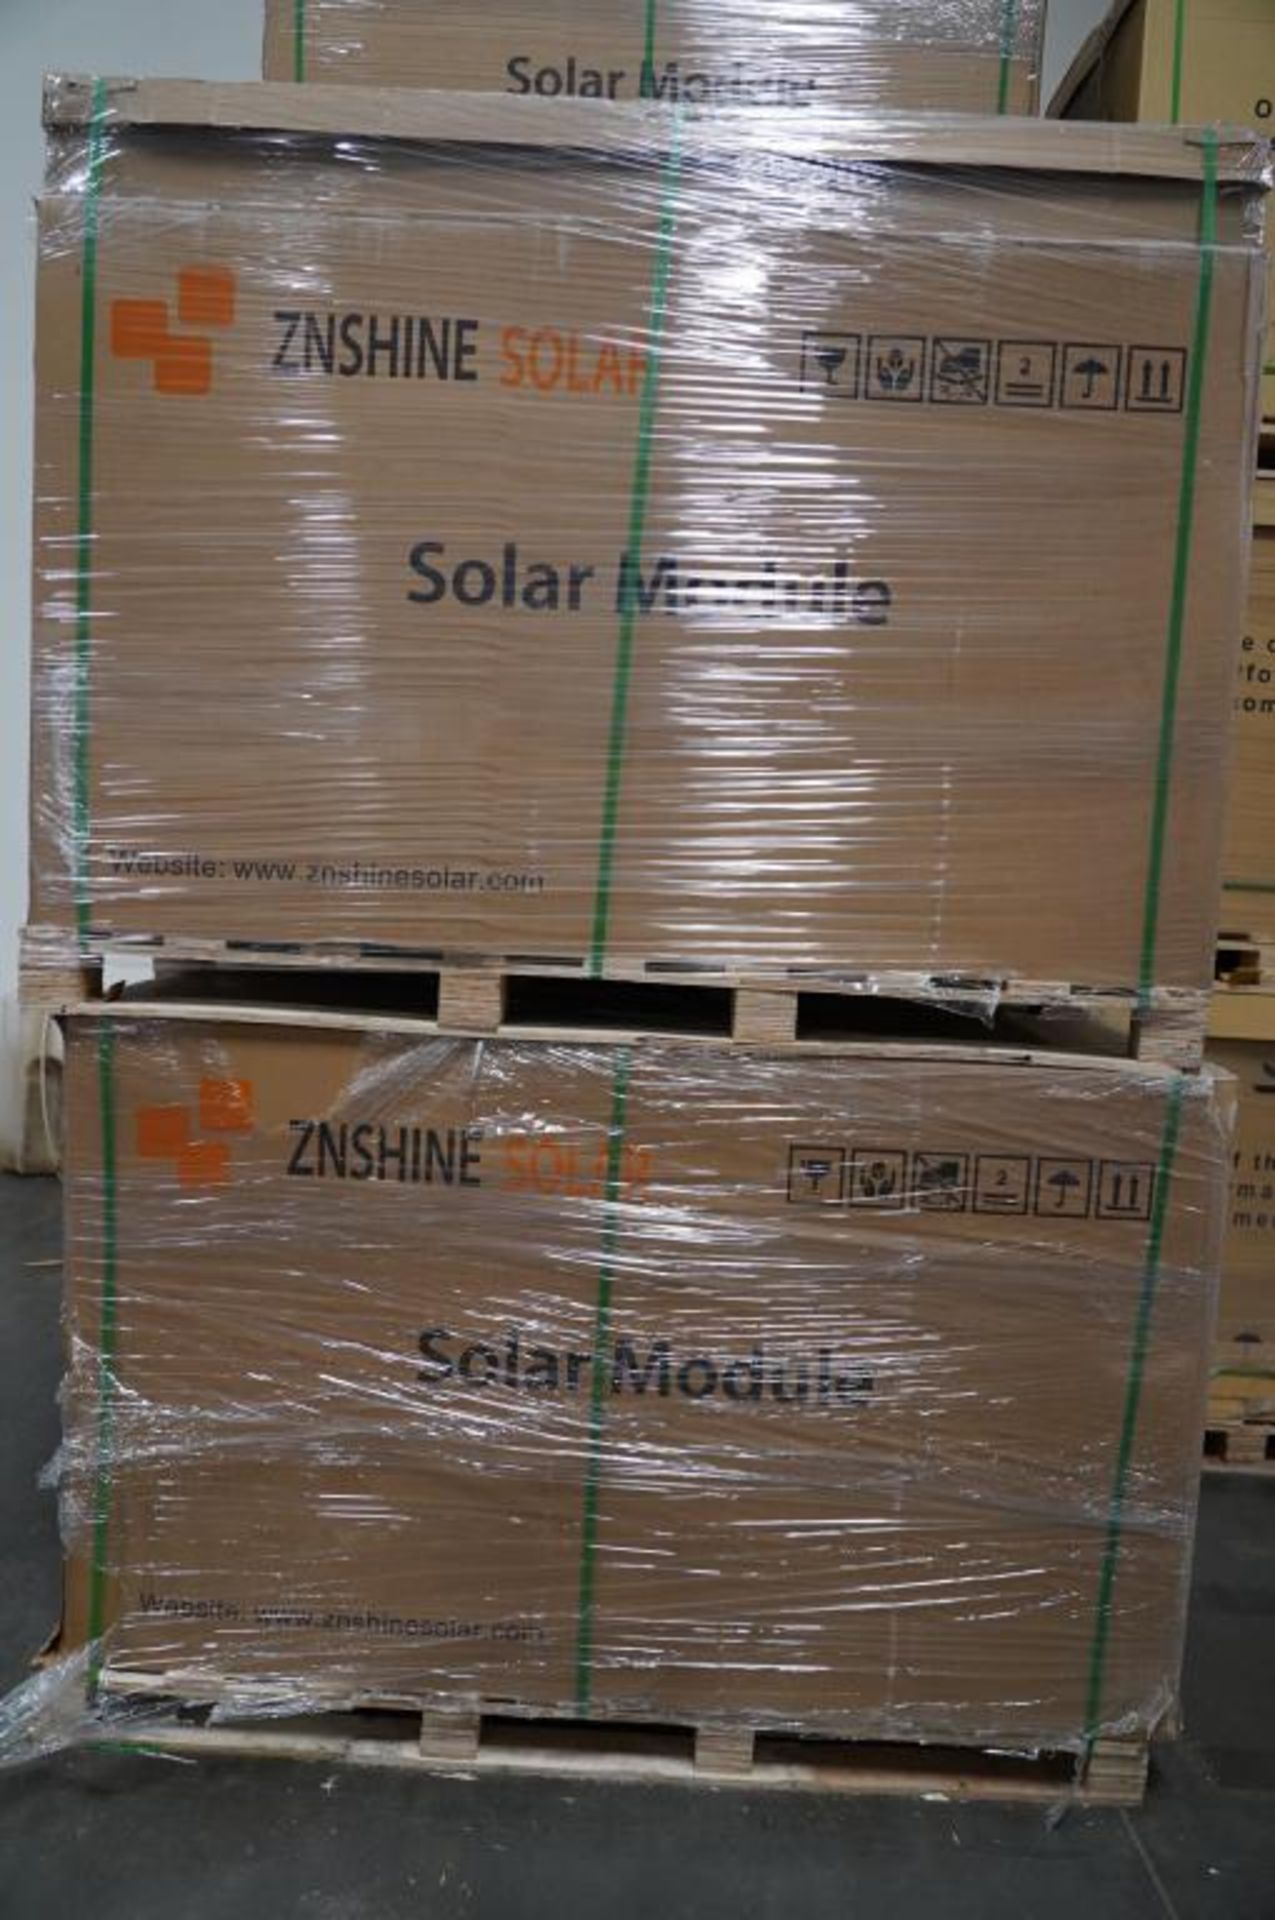 ZNShine 370 Watt PV Solar Panels - Image 2 of 9